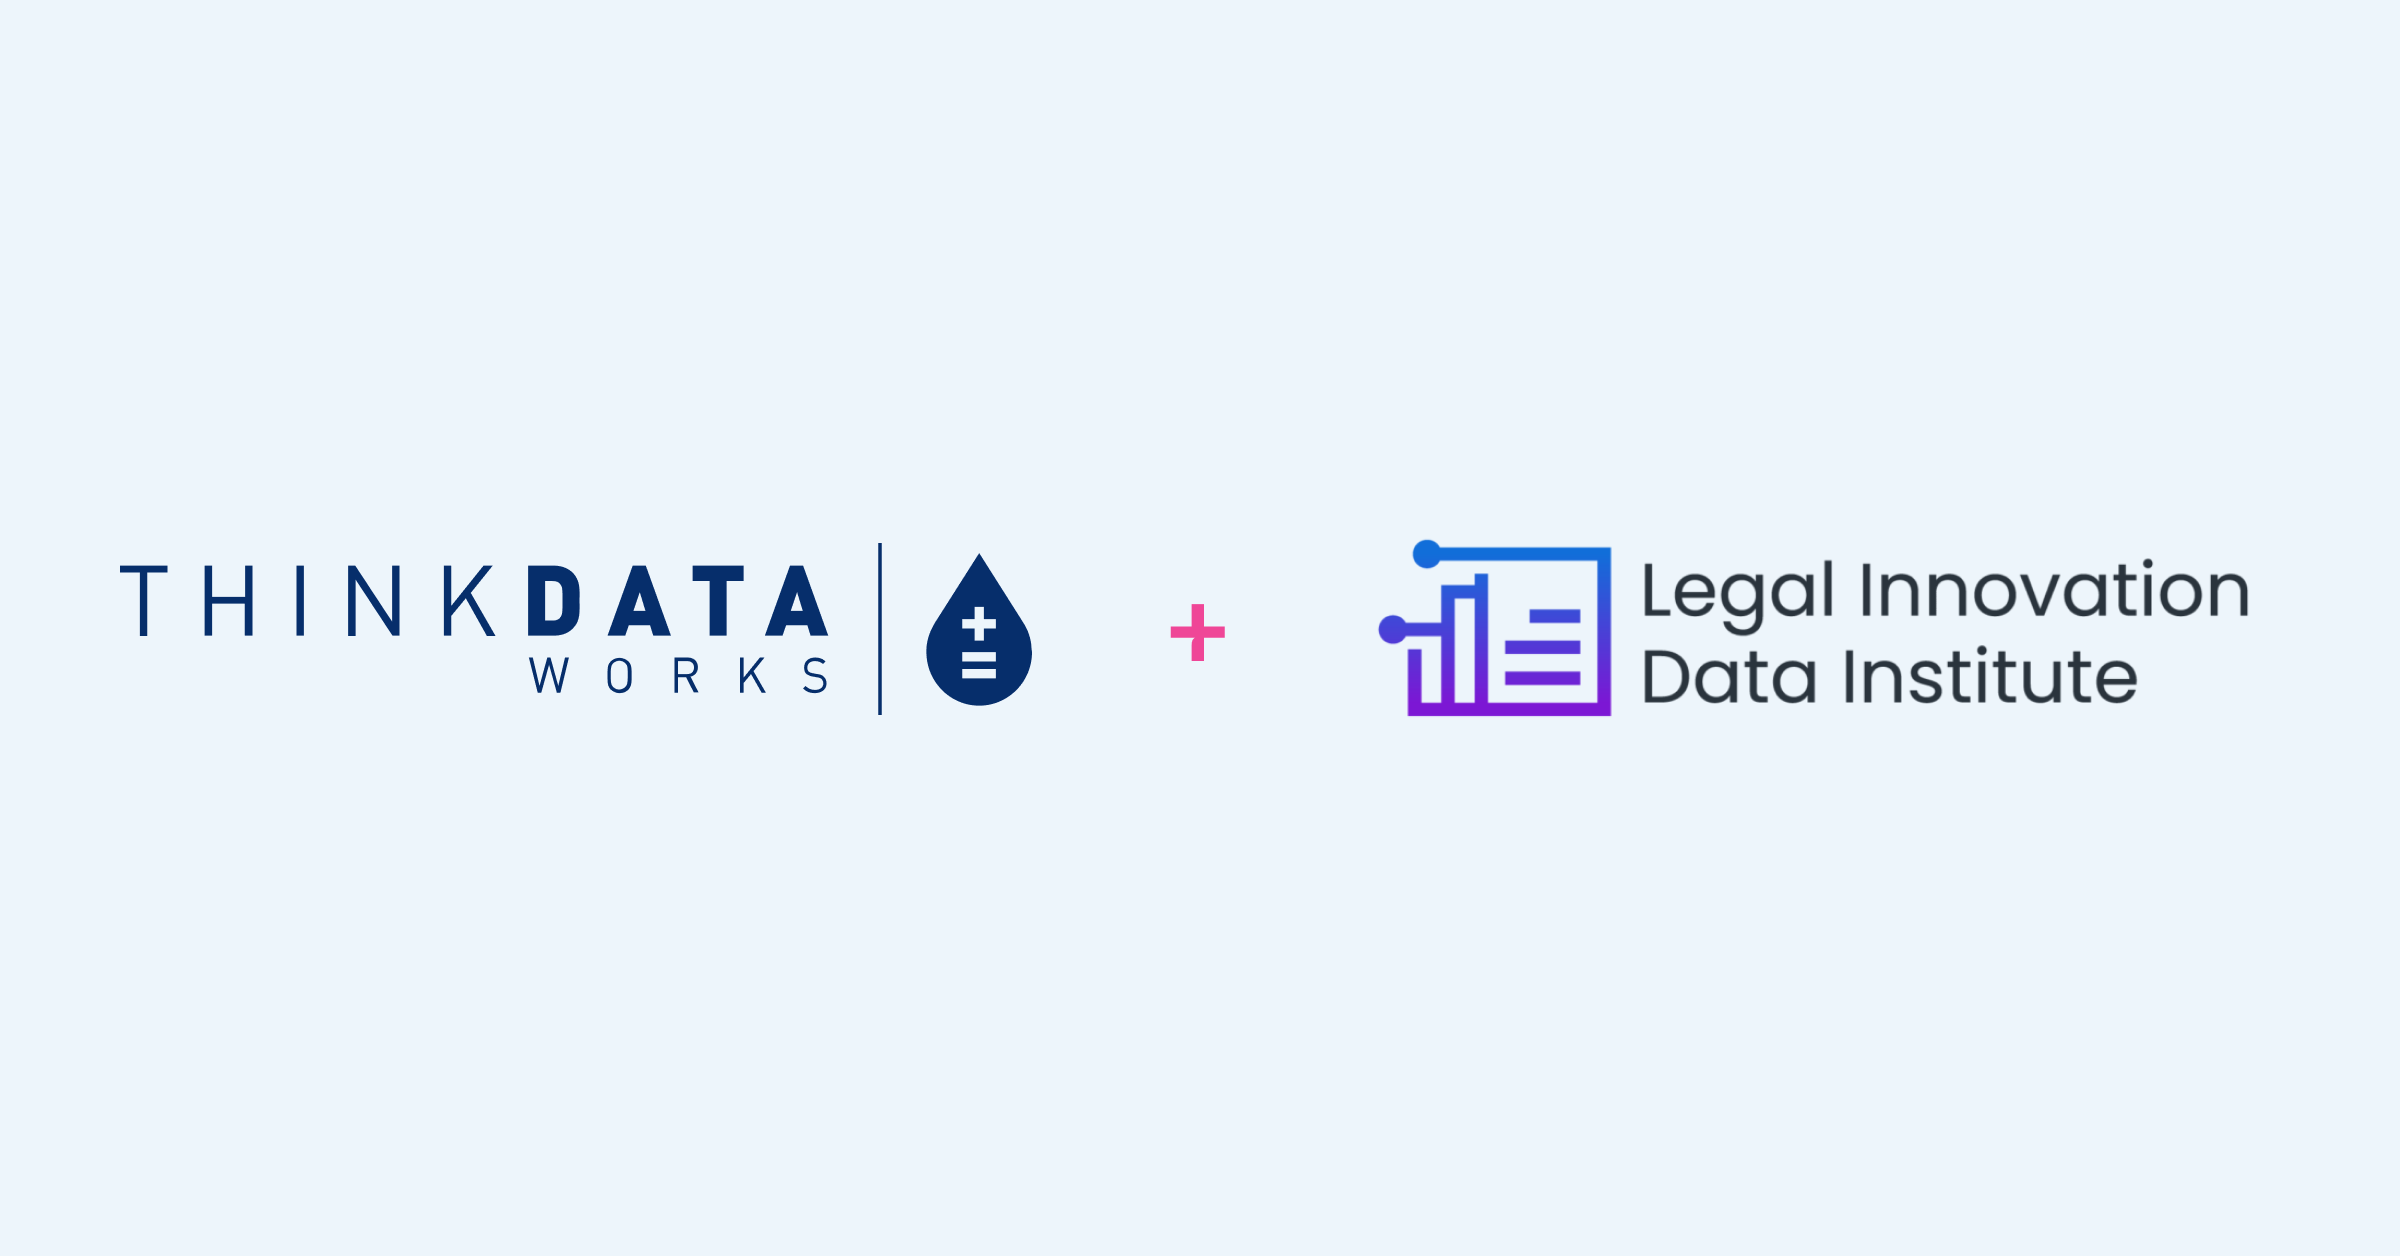 ThinkData Works partners with Legal Innovation Data Institute (LIDI)